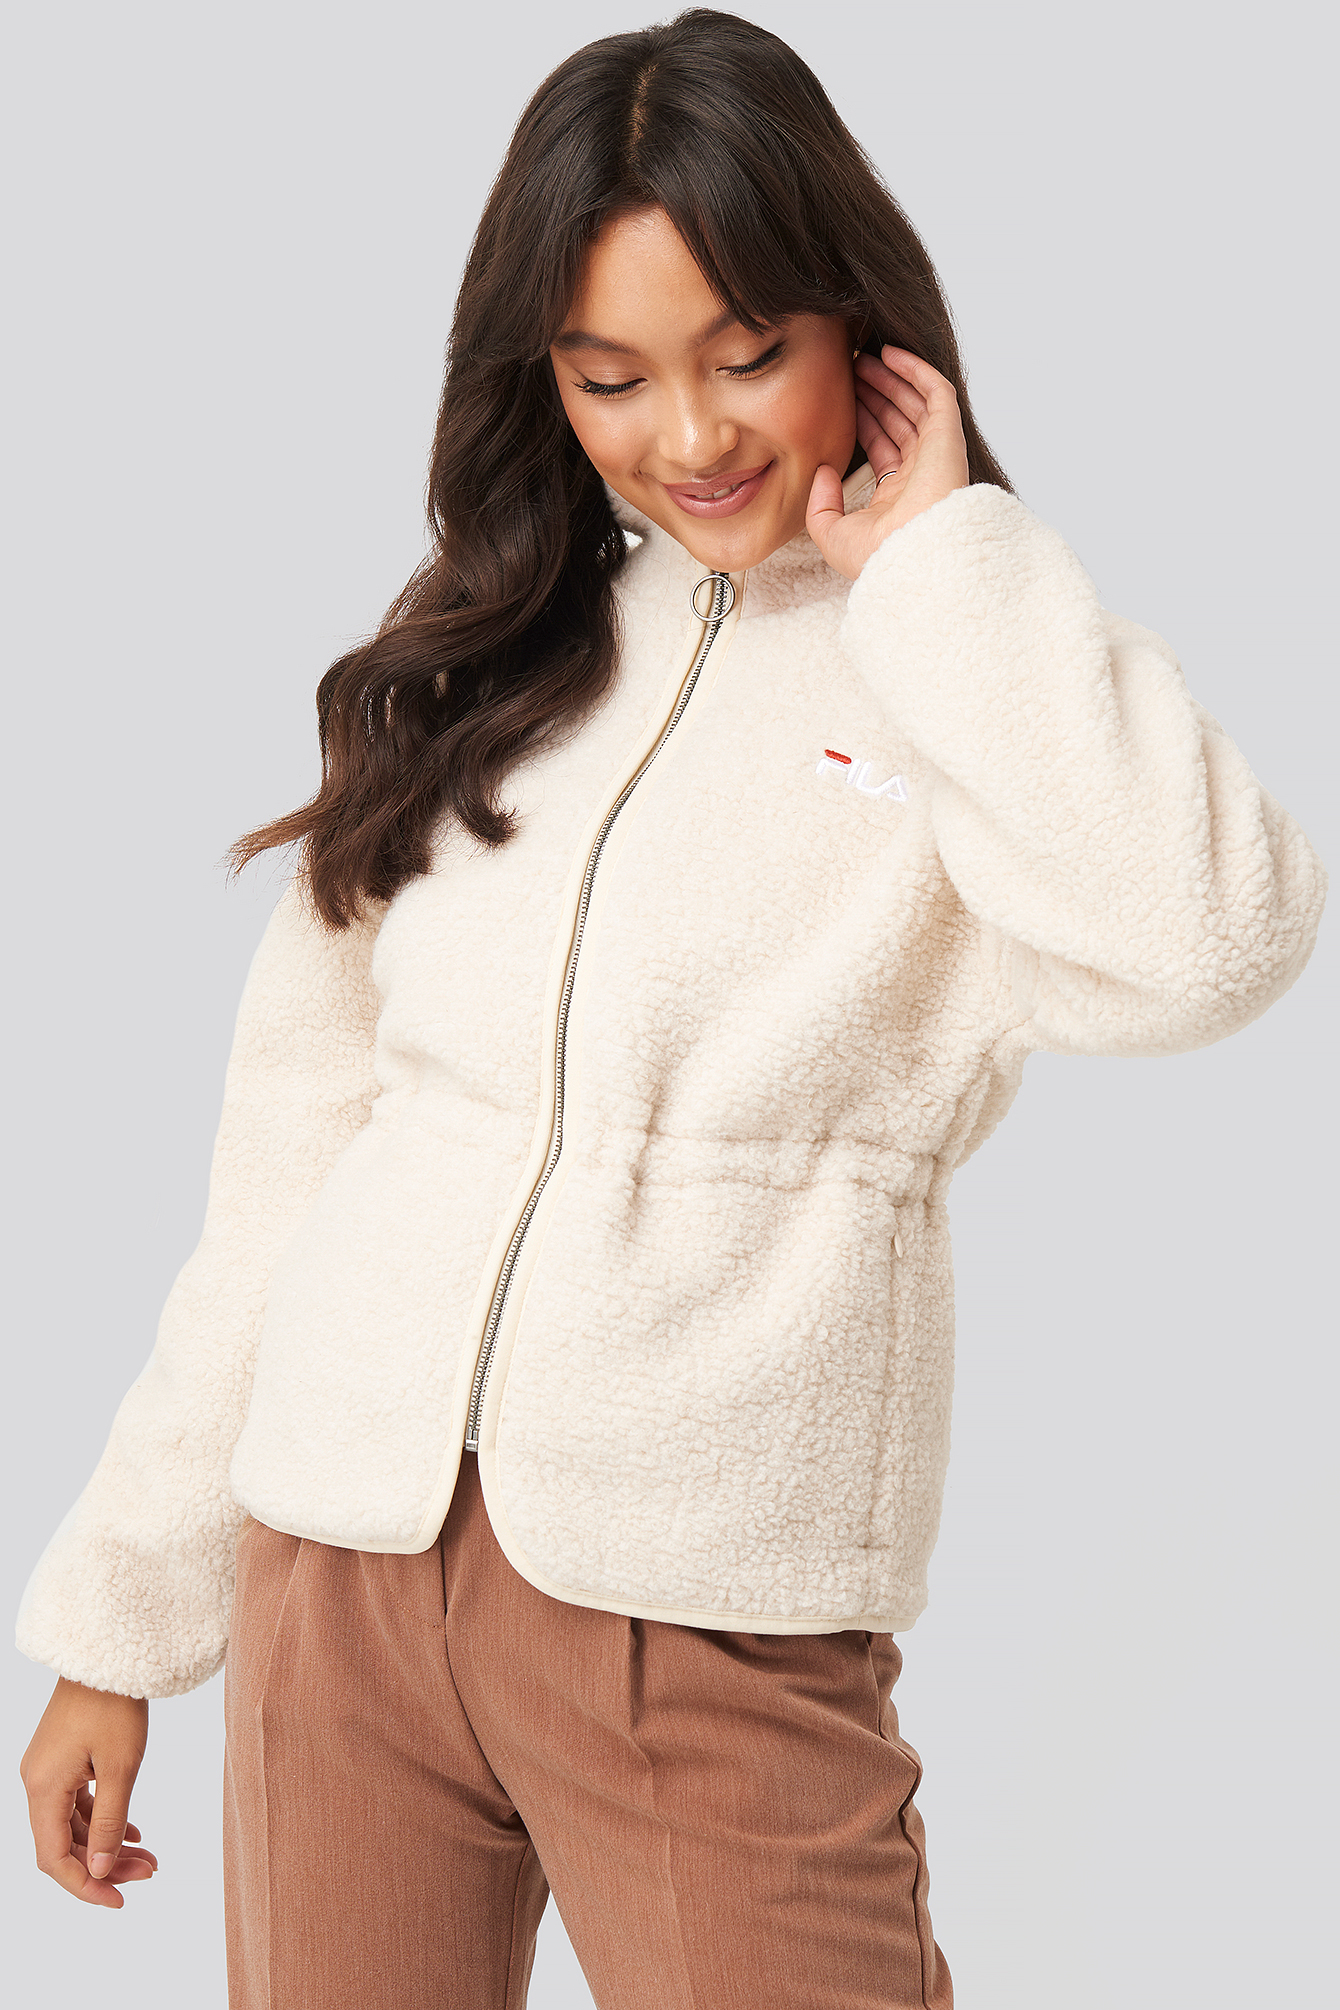 fila white fleece jacket